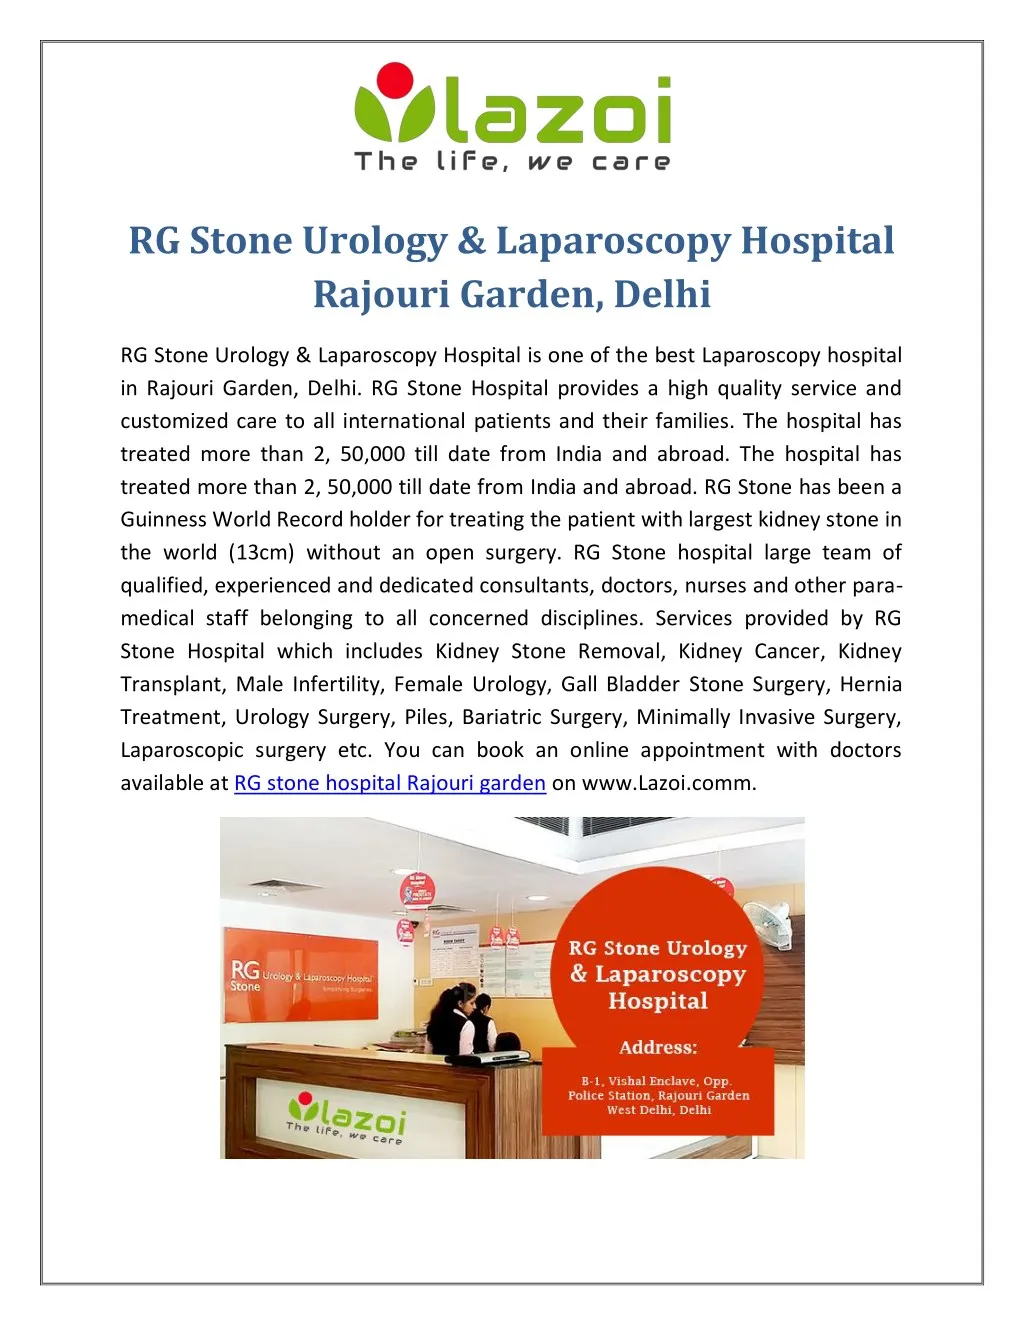 rg stone urology laparoscopy hospital rajouri